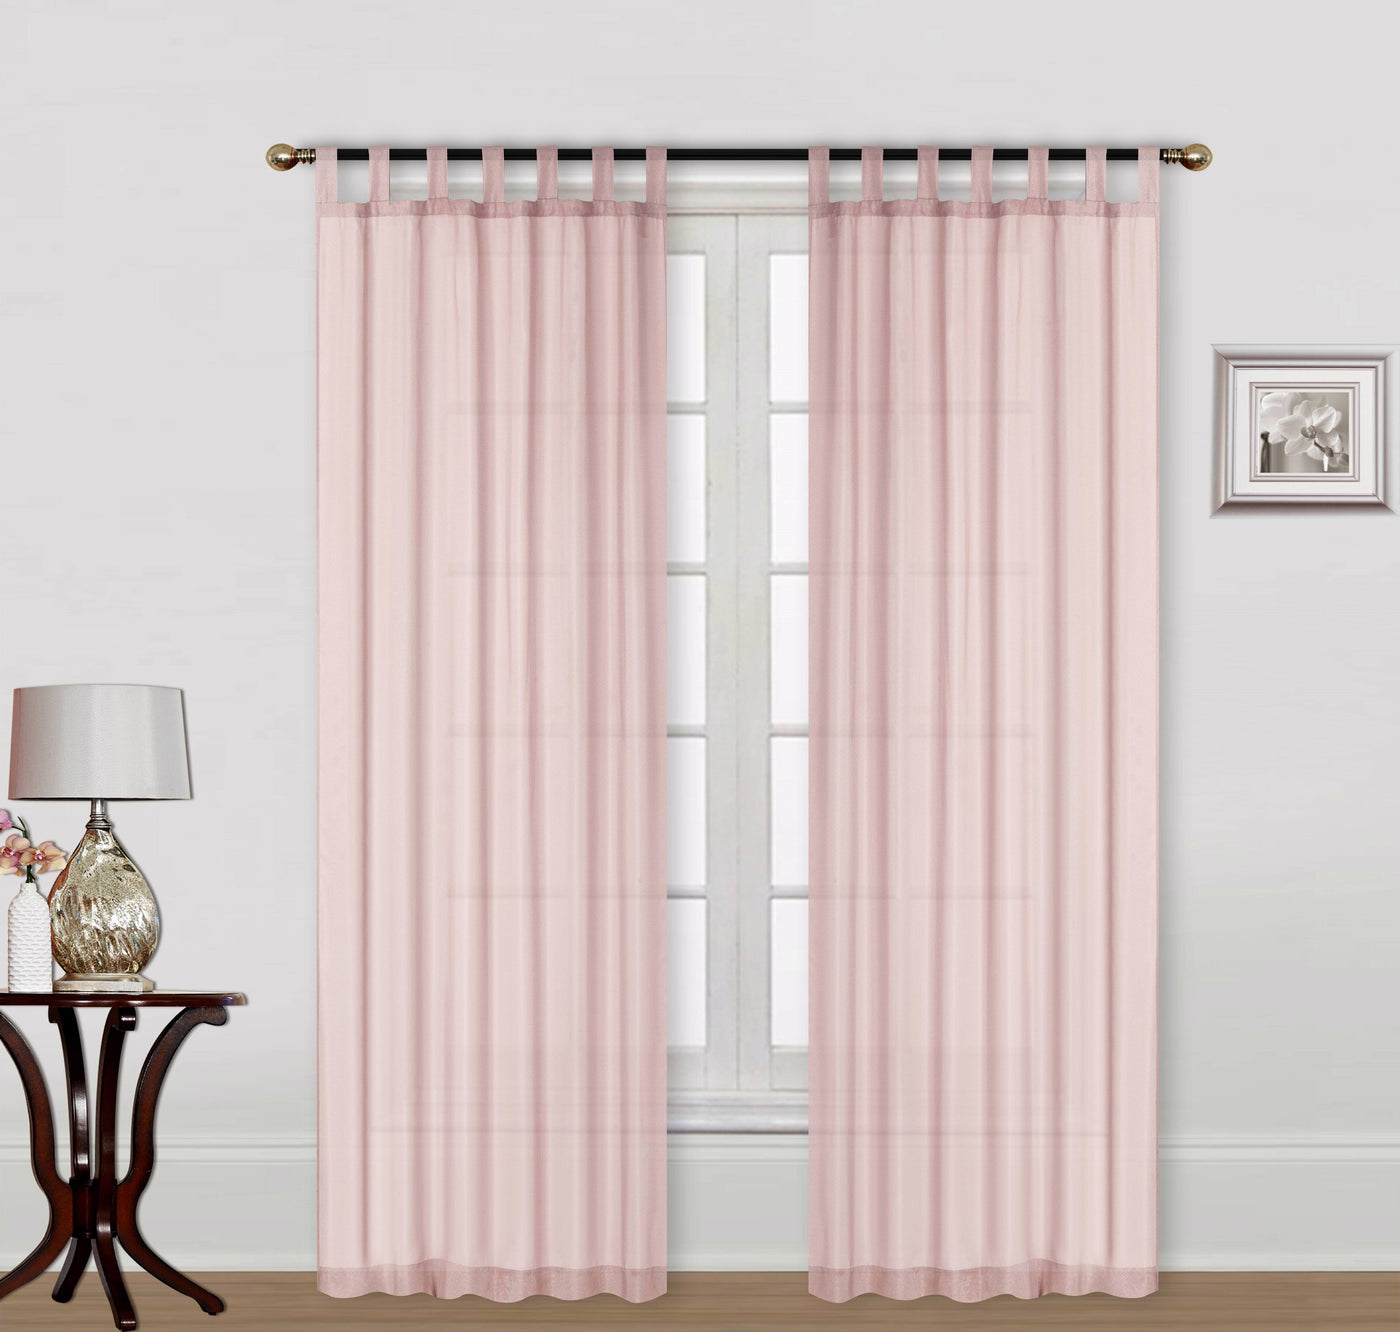 Texture Semi-Sheer Tab Top Curtain Panel Trevor Light Filtering Soft White